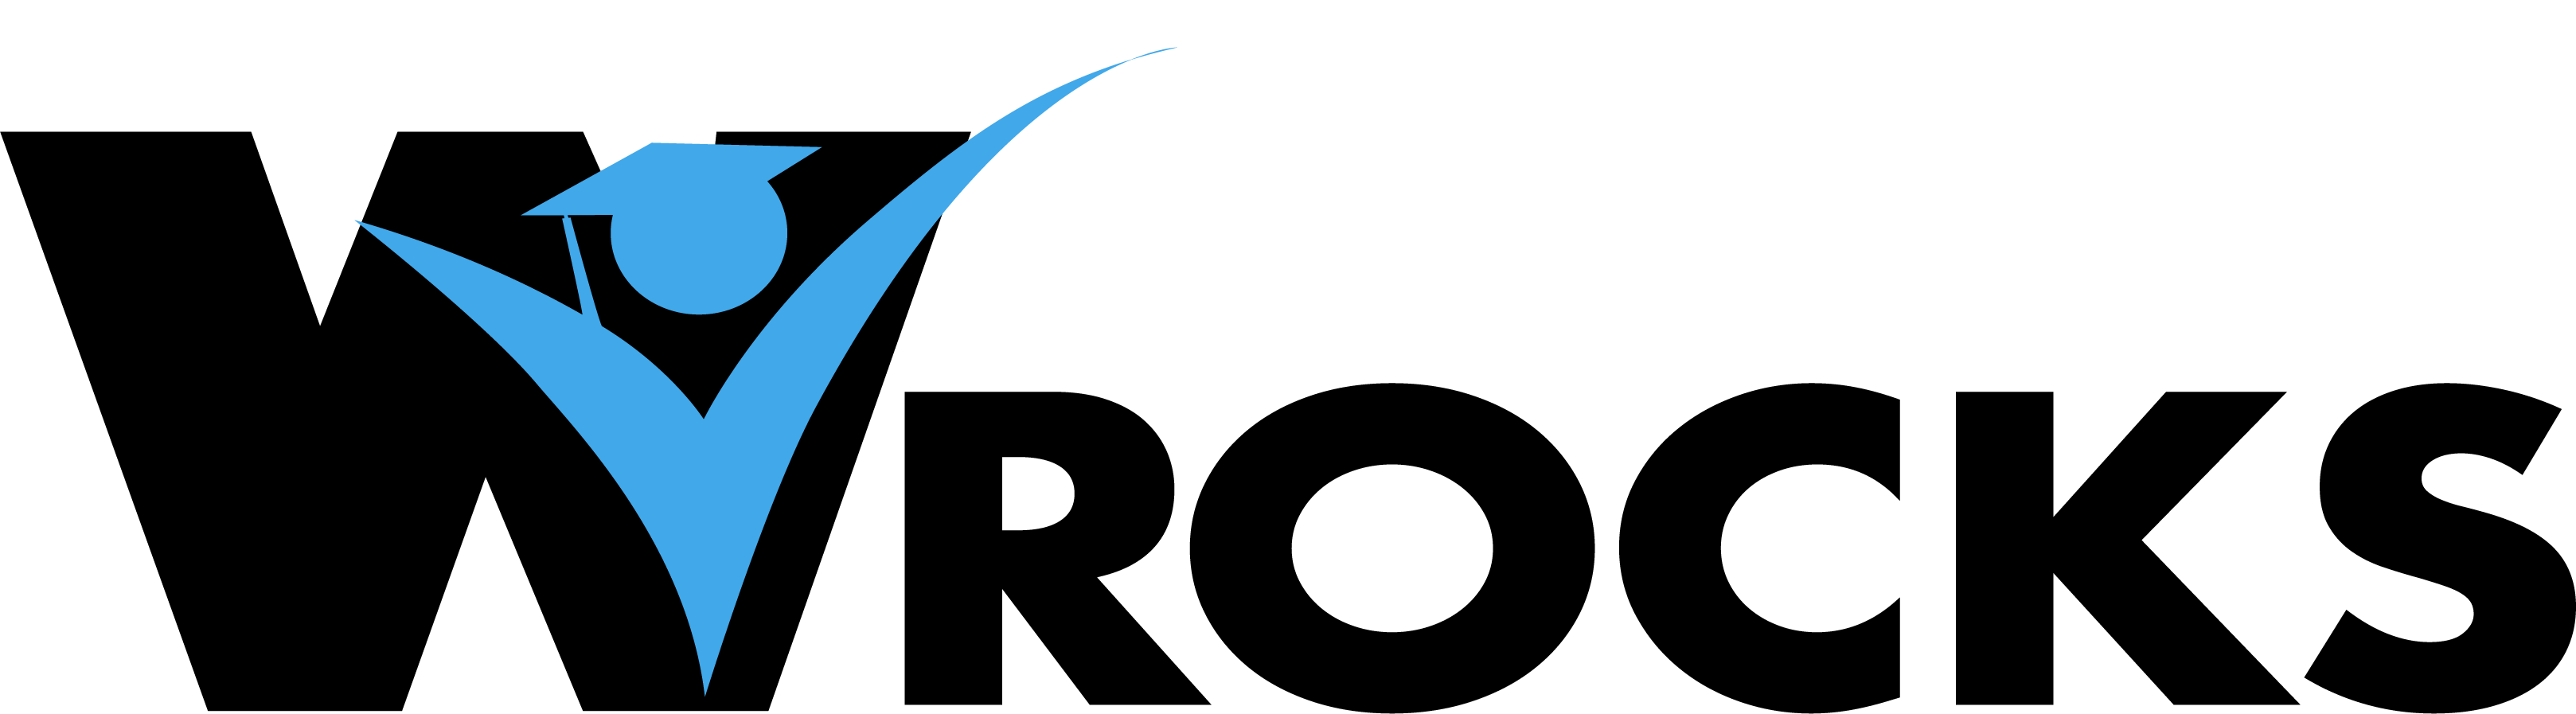 WVRocks logo